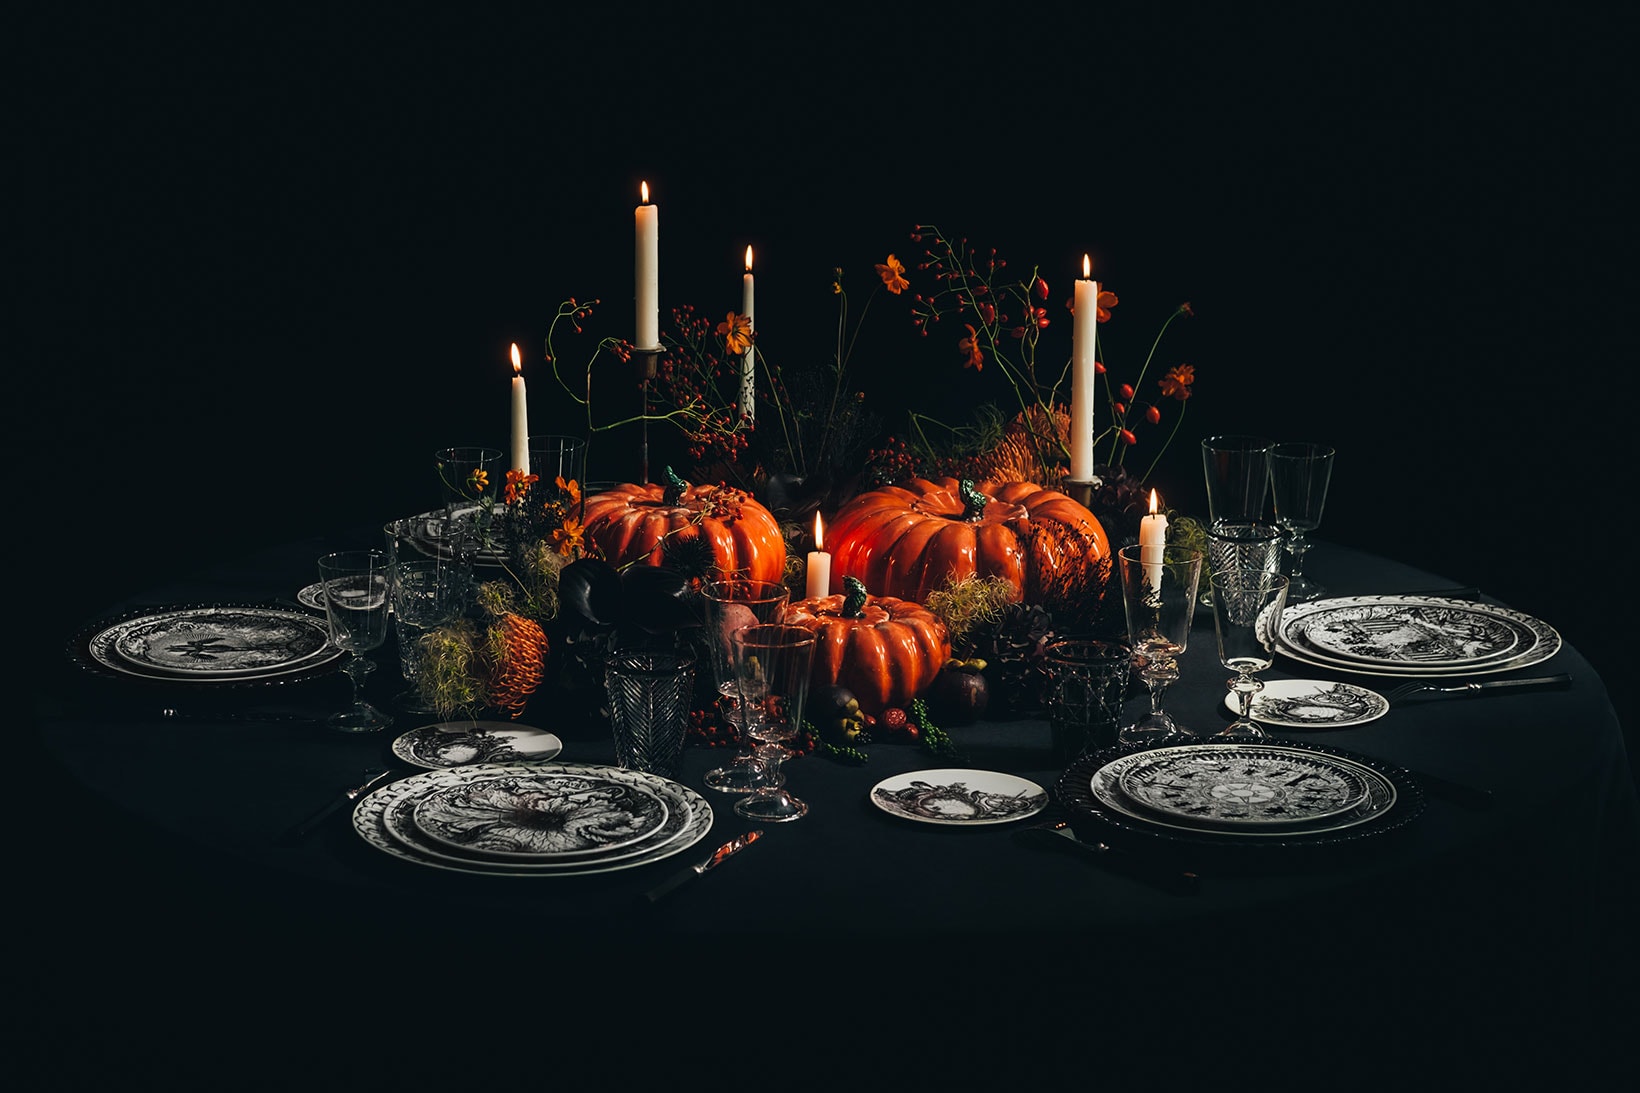 Dior Maison Halloween Table Homeware Decor Ceramic Plates Candles Pumpkins